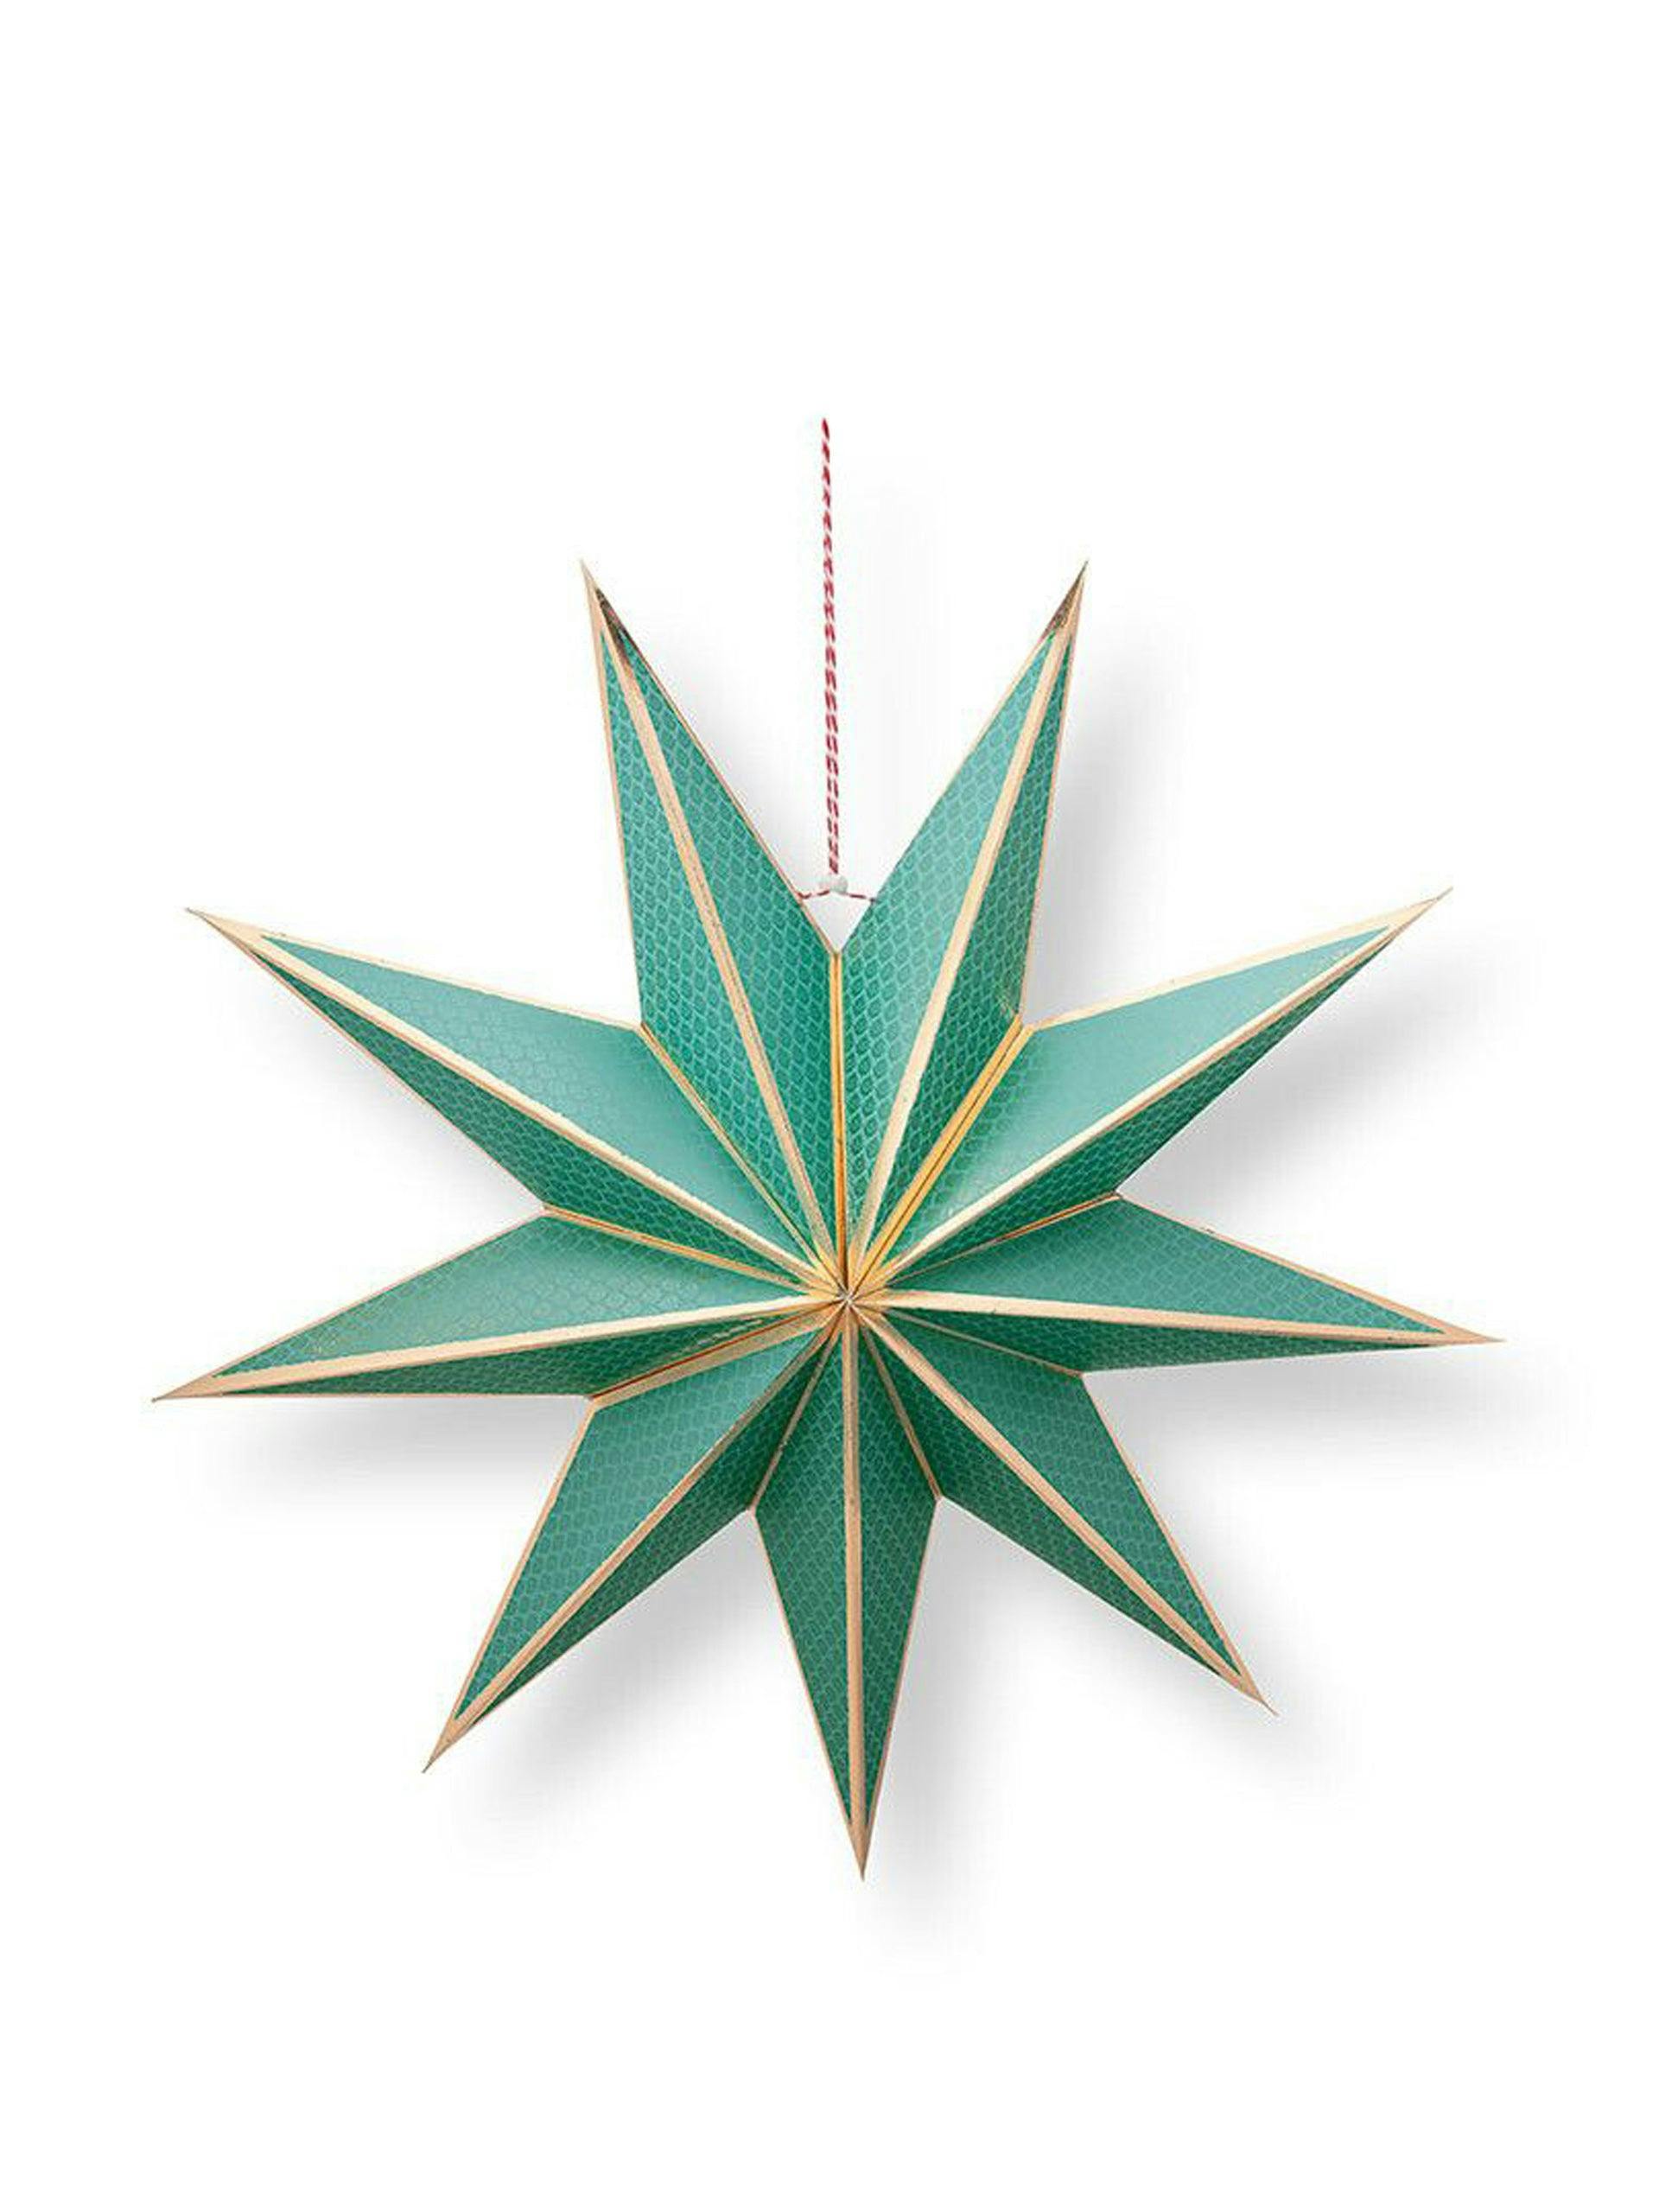 Green paper star